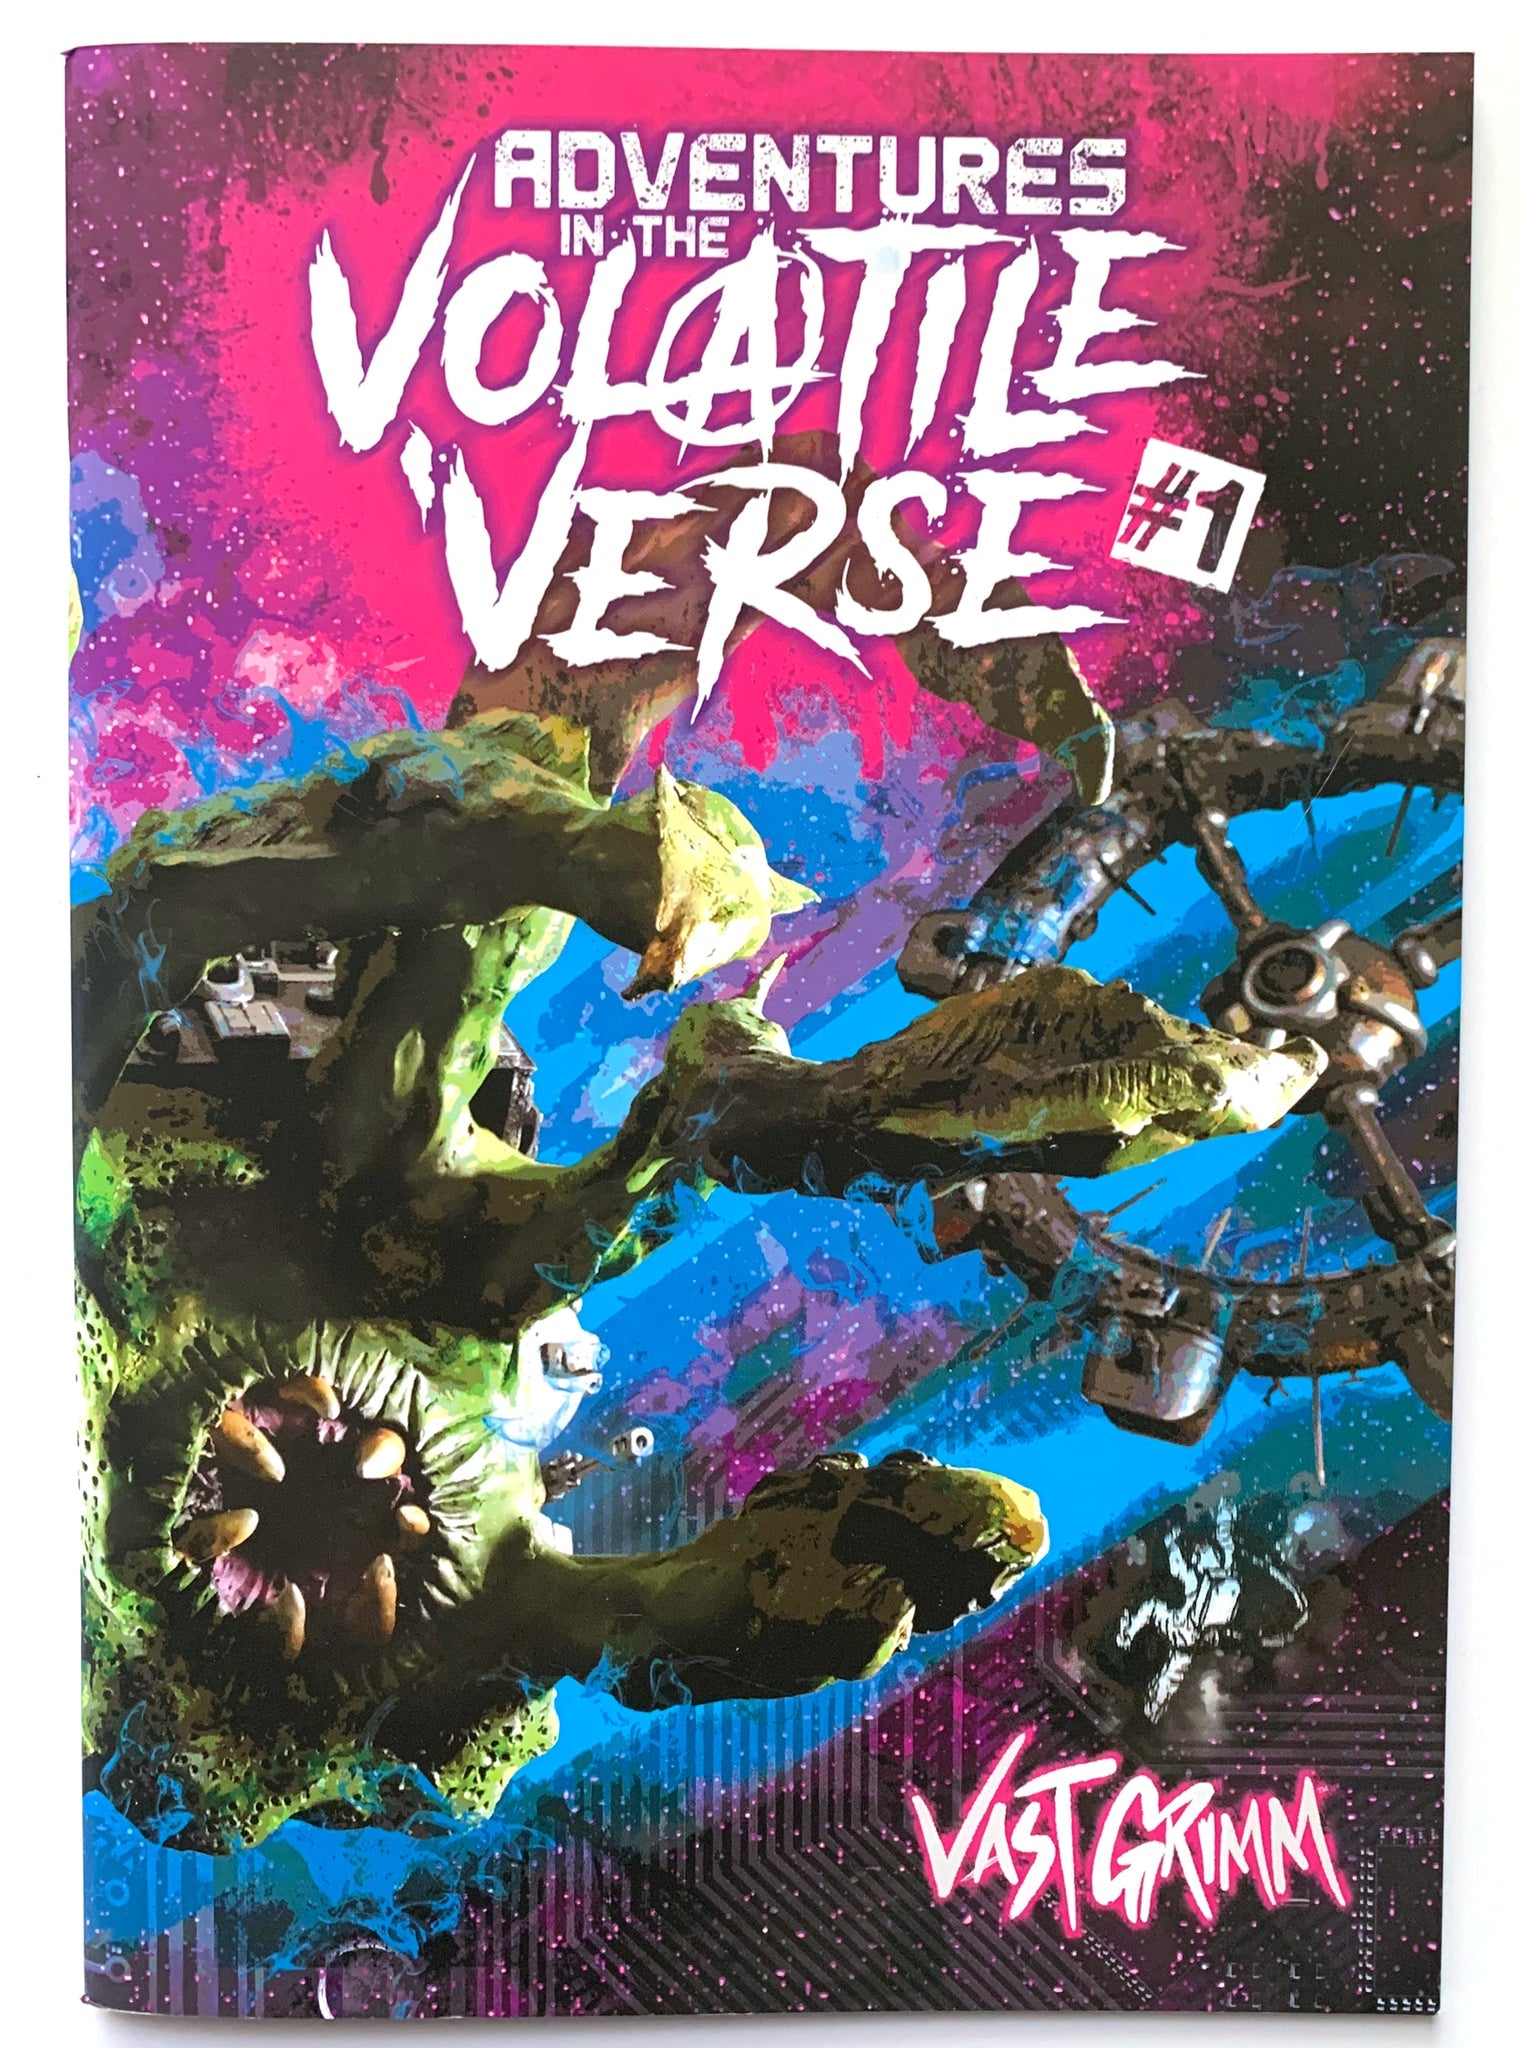 Vast Grimm Adventures in the Volatile Verse 1 | Grognard Games